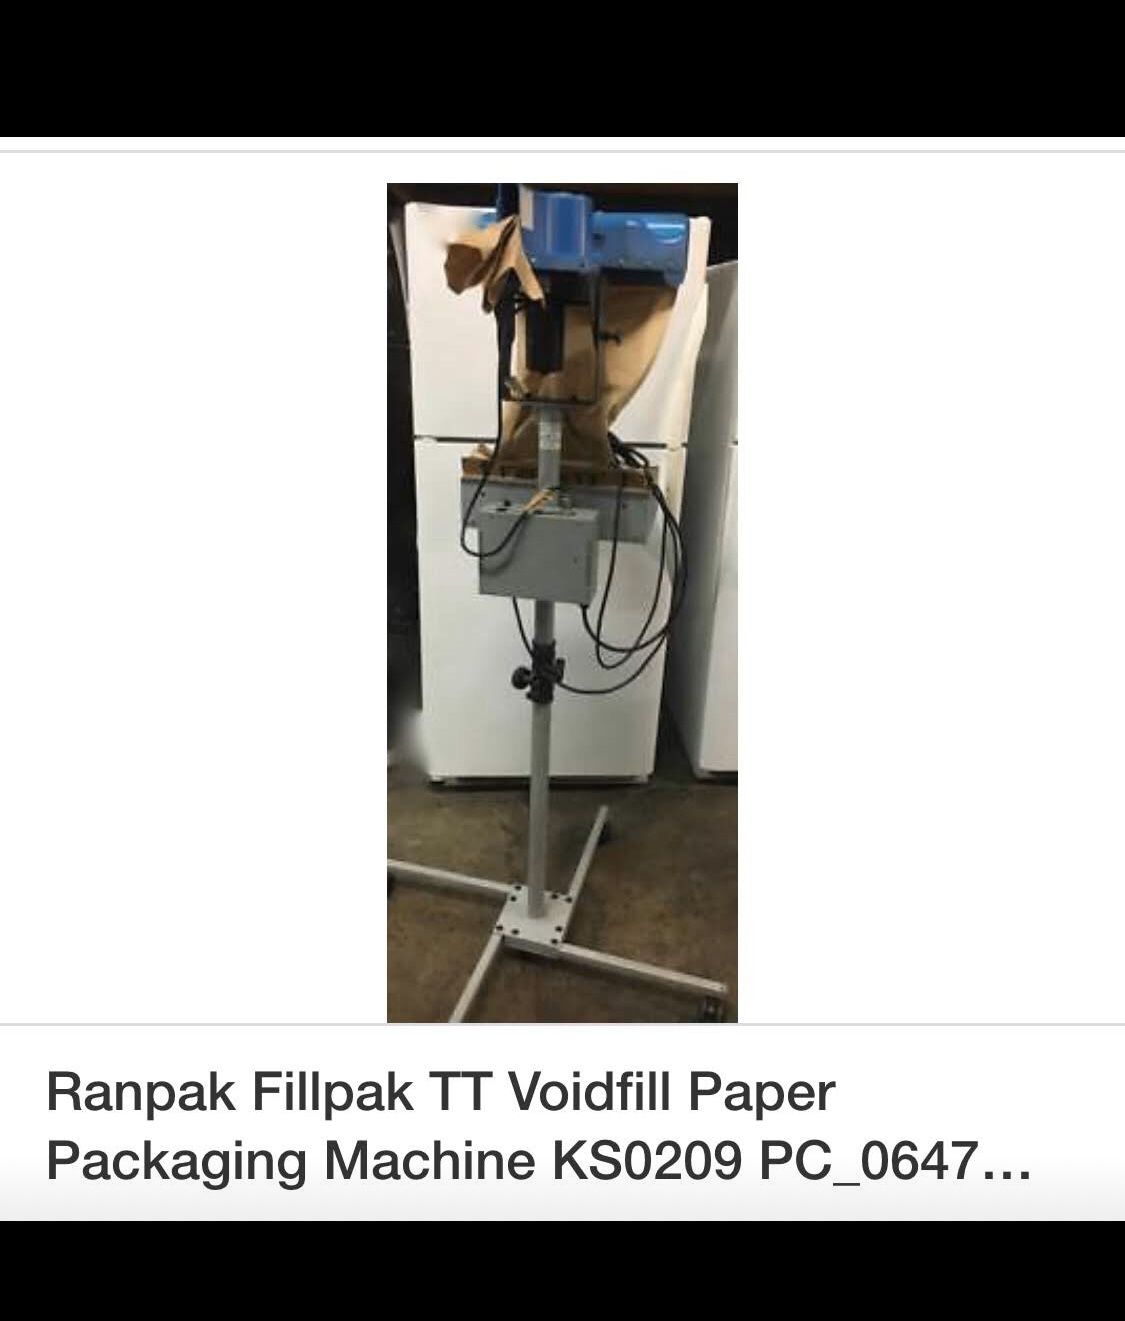 Packing machine KS0209 PC-0647 Ranpak Fillpak TT voidfill paper like new never used